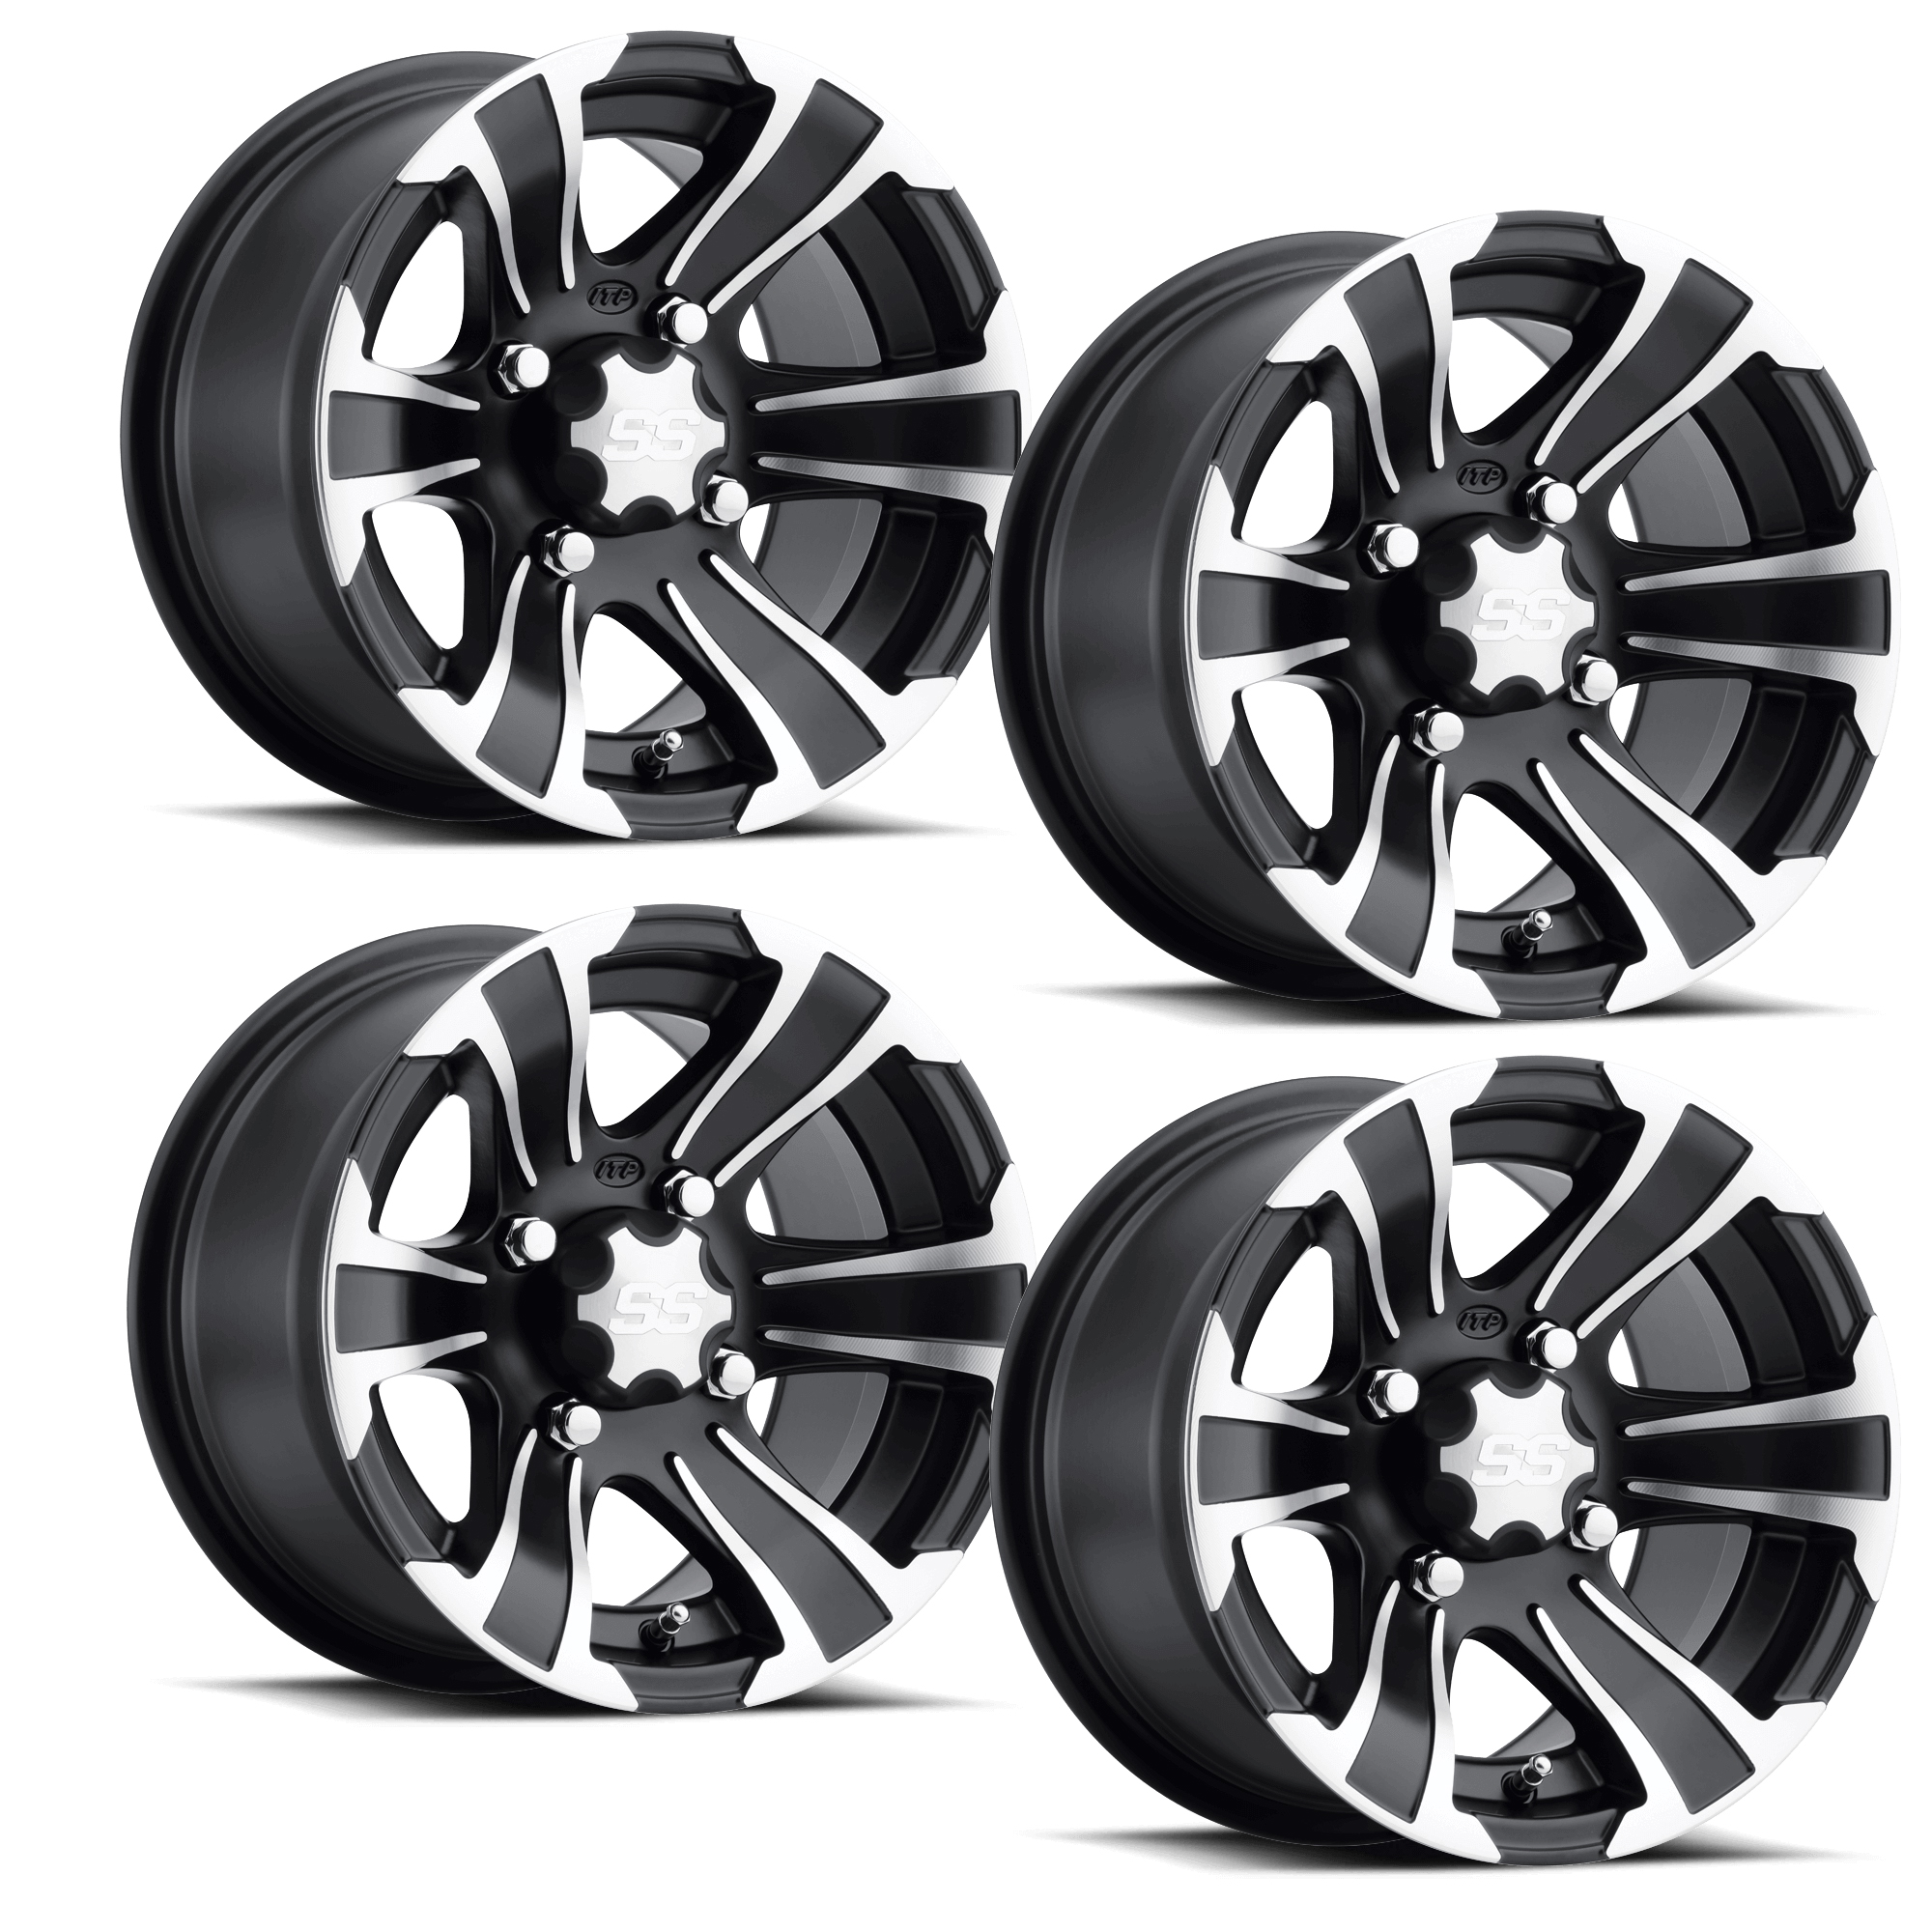 I.T.P Tires SS312 Alloy Wheel Black 12x7 4+3 for Polaris Sportsman 